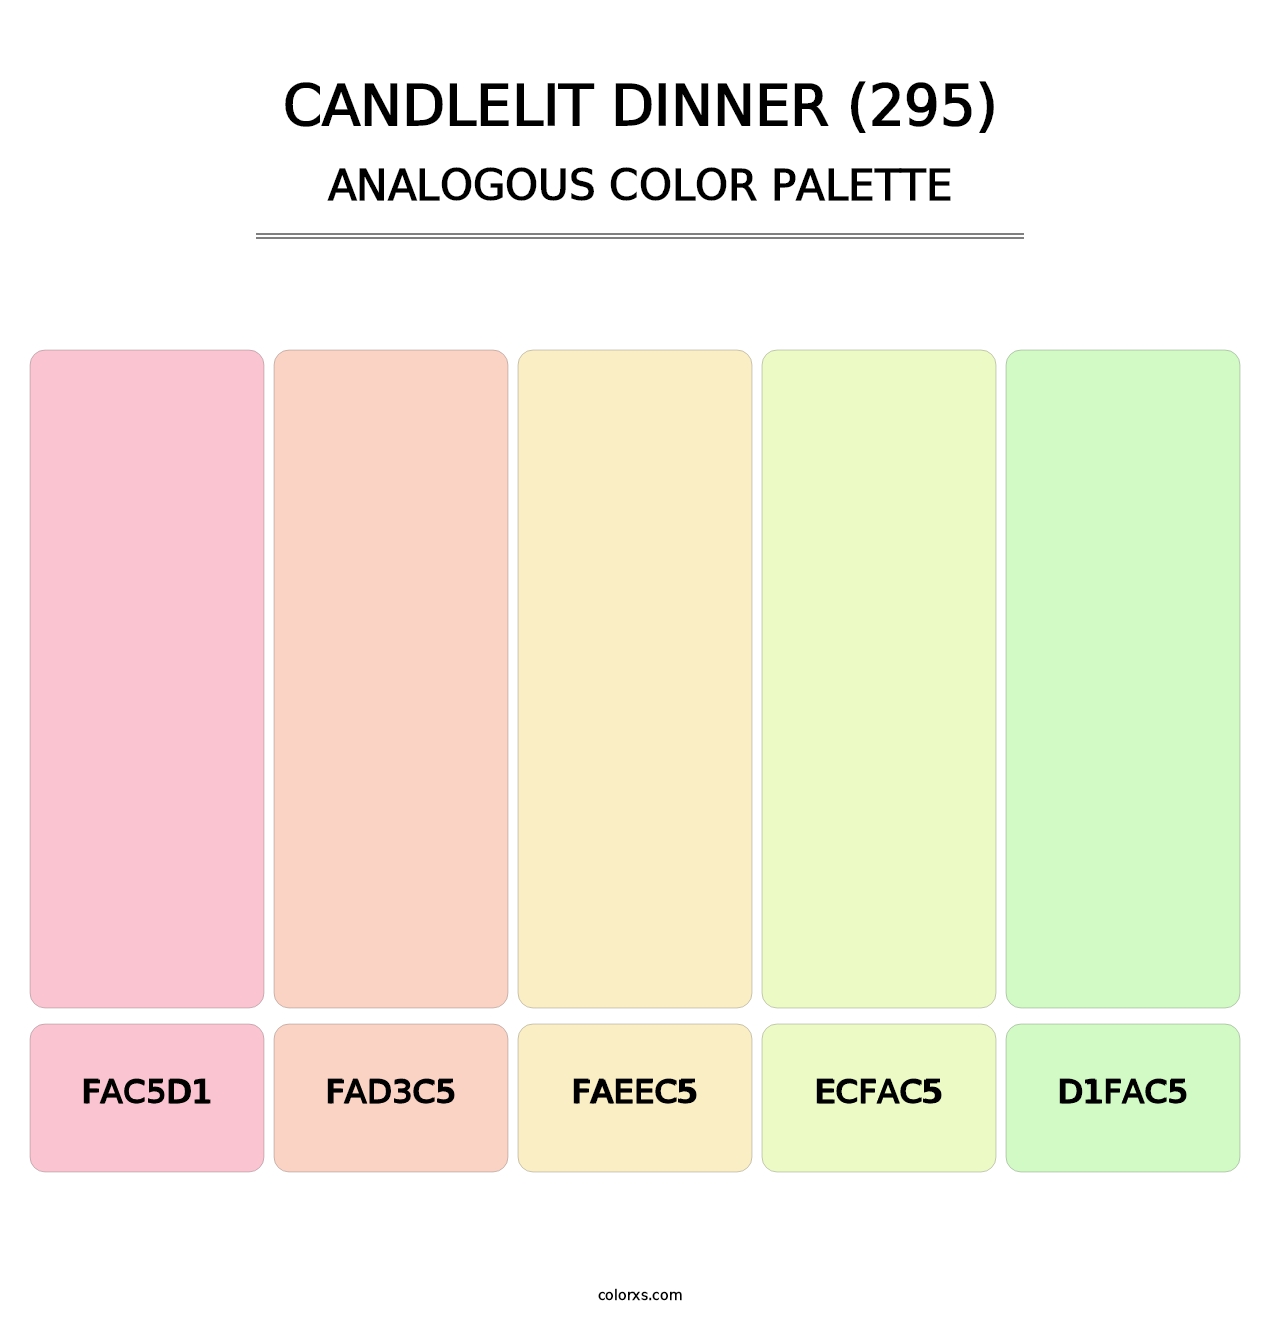 Candlelit Dinner (295) - Analogous Color Palette